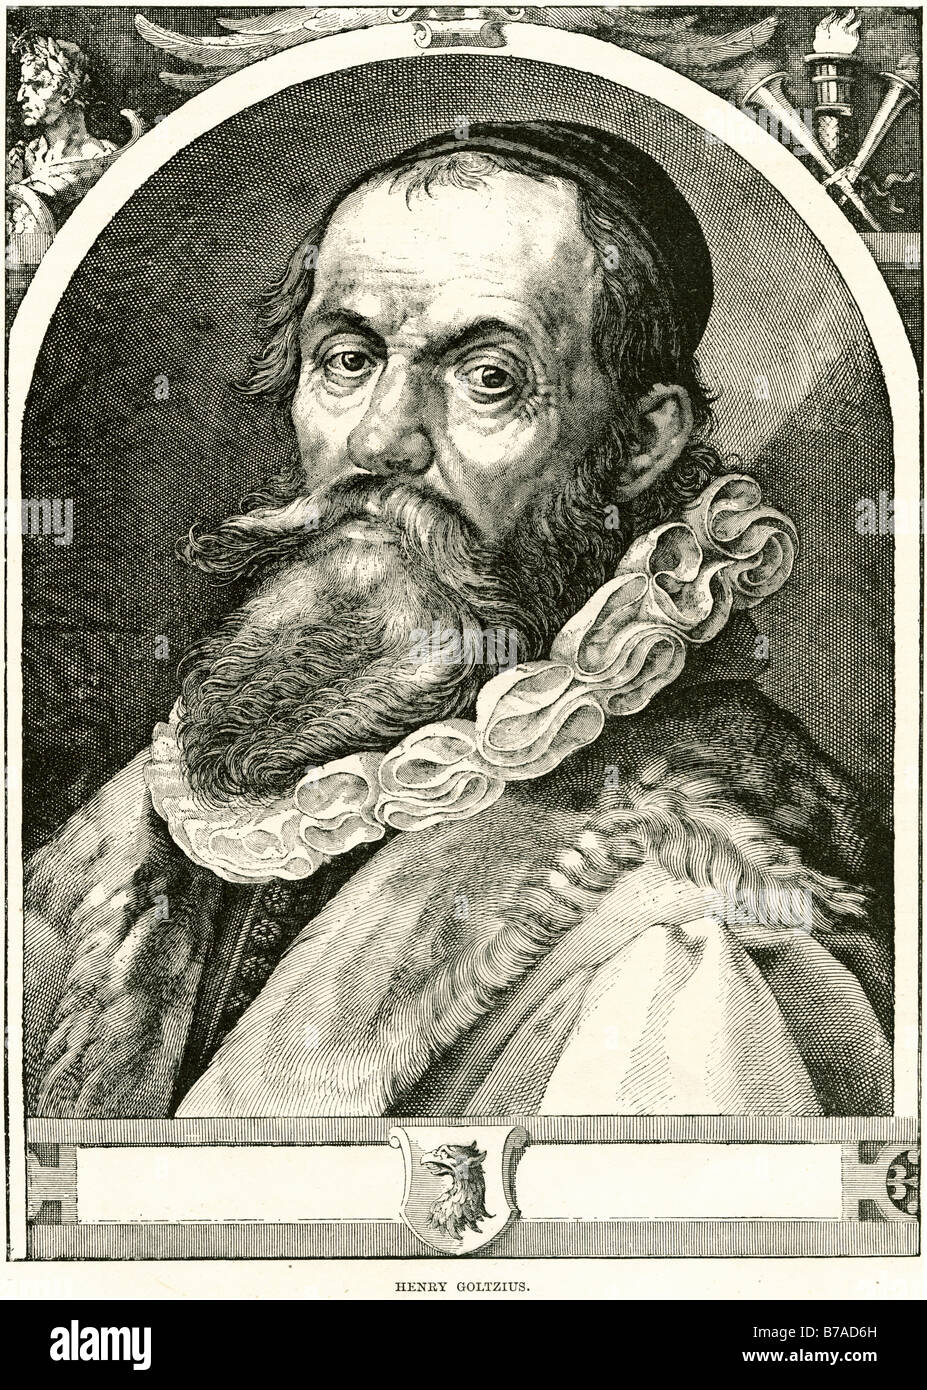 henry coltzius goltzius Hendrik Goltzius (January or February 1558 - January 1, 1617, Haarlem), was a Dutch printmaker, draftsma Stock Photo